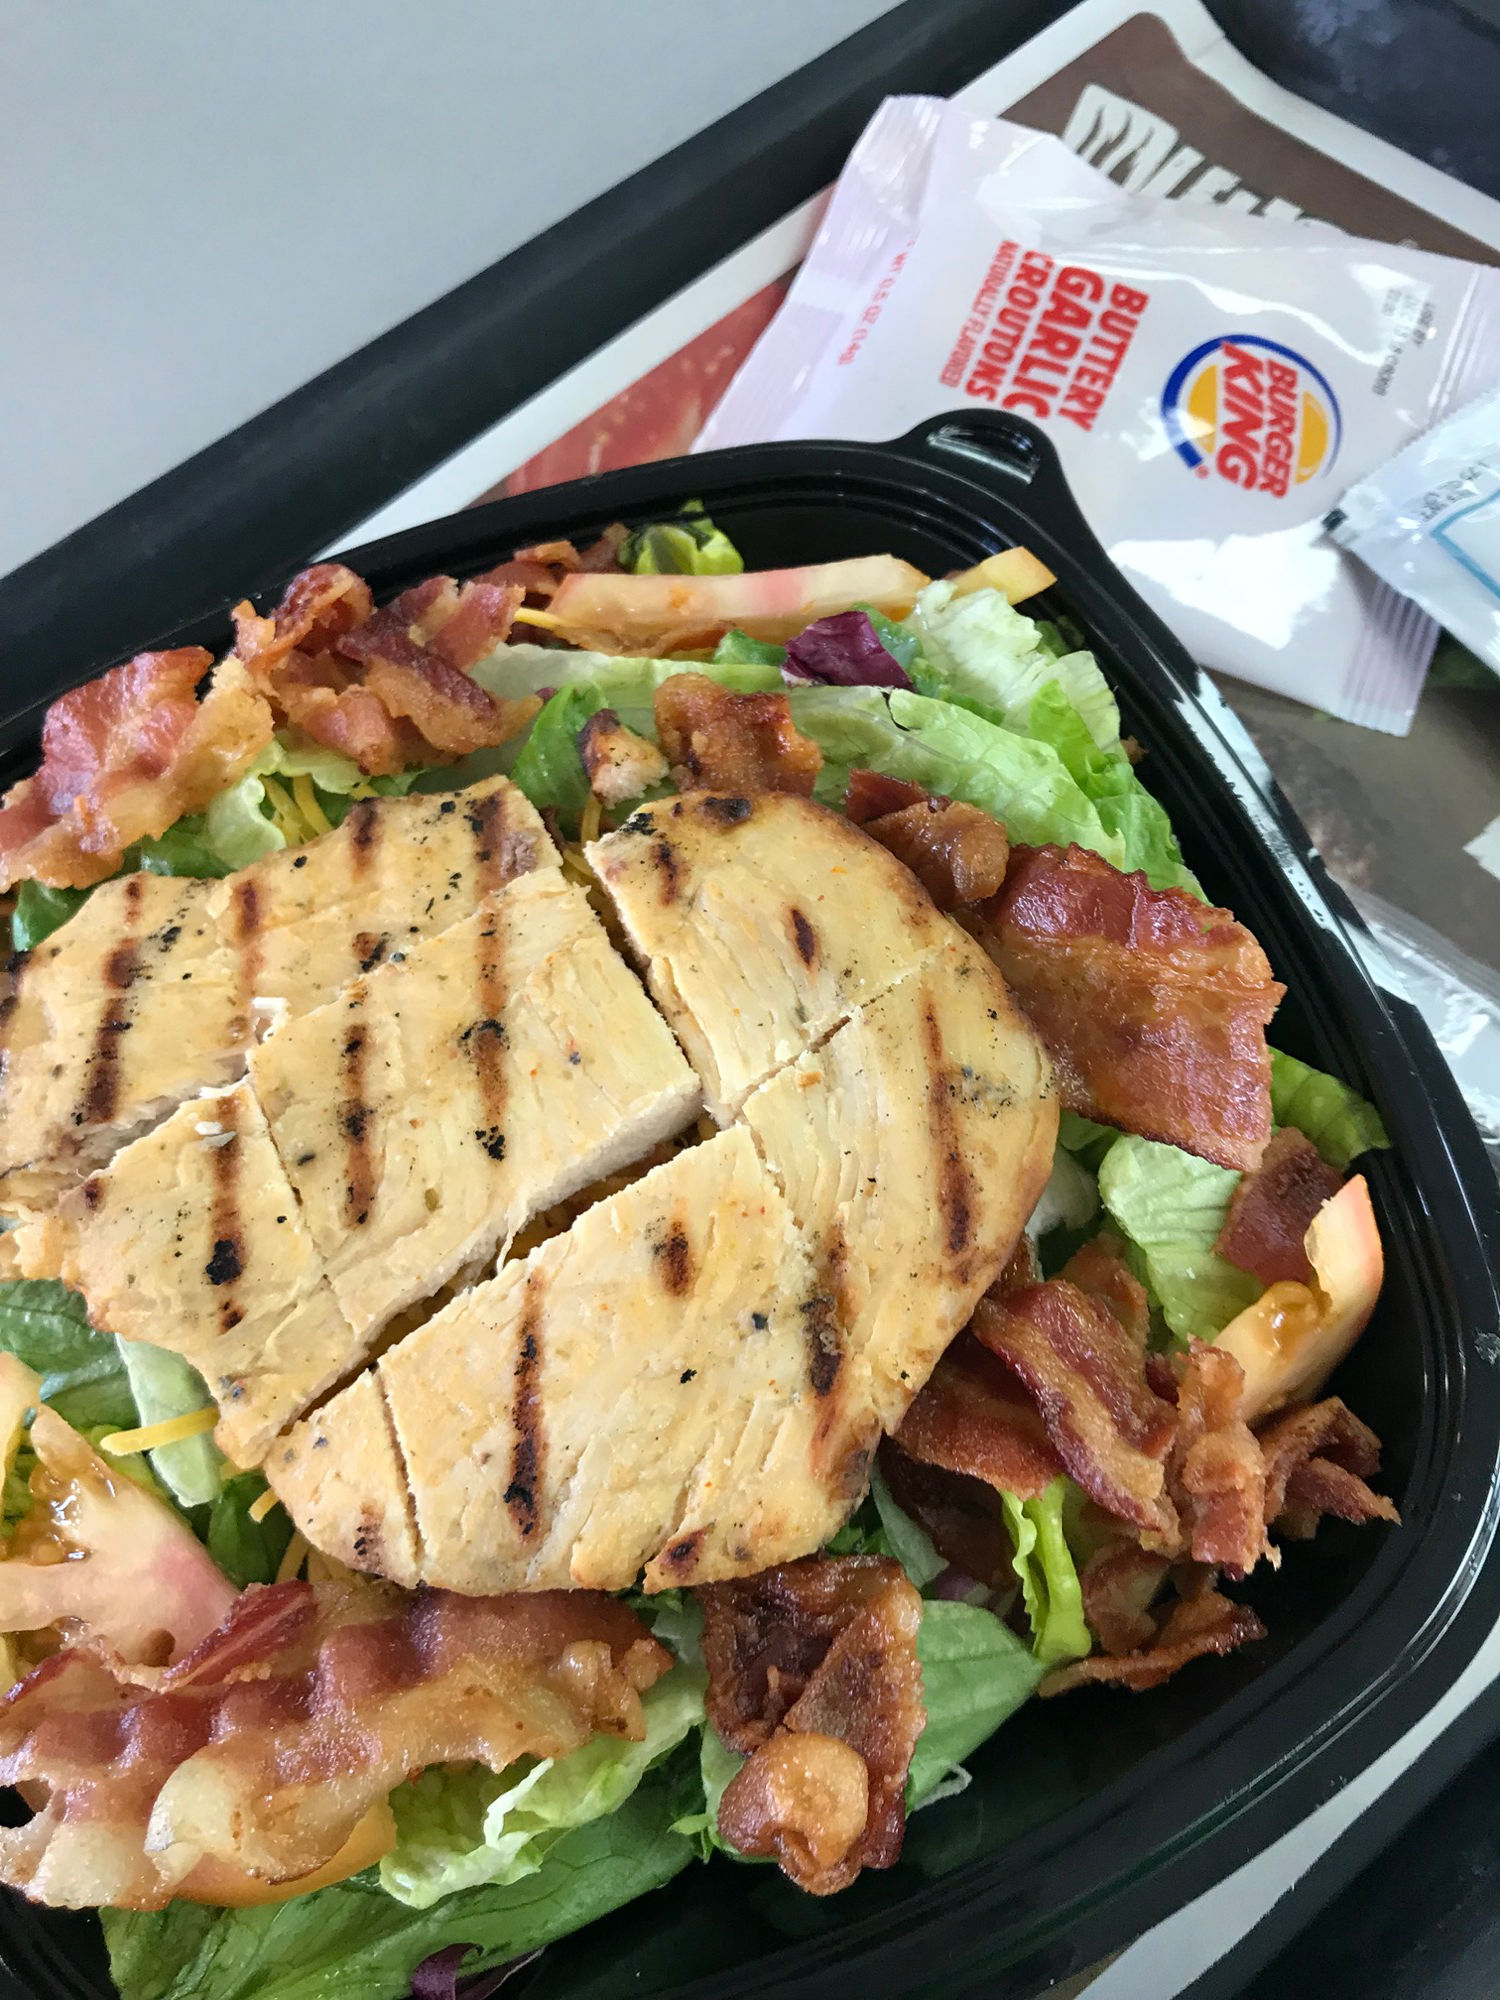 Burger King Chicken Club Salad